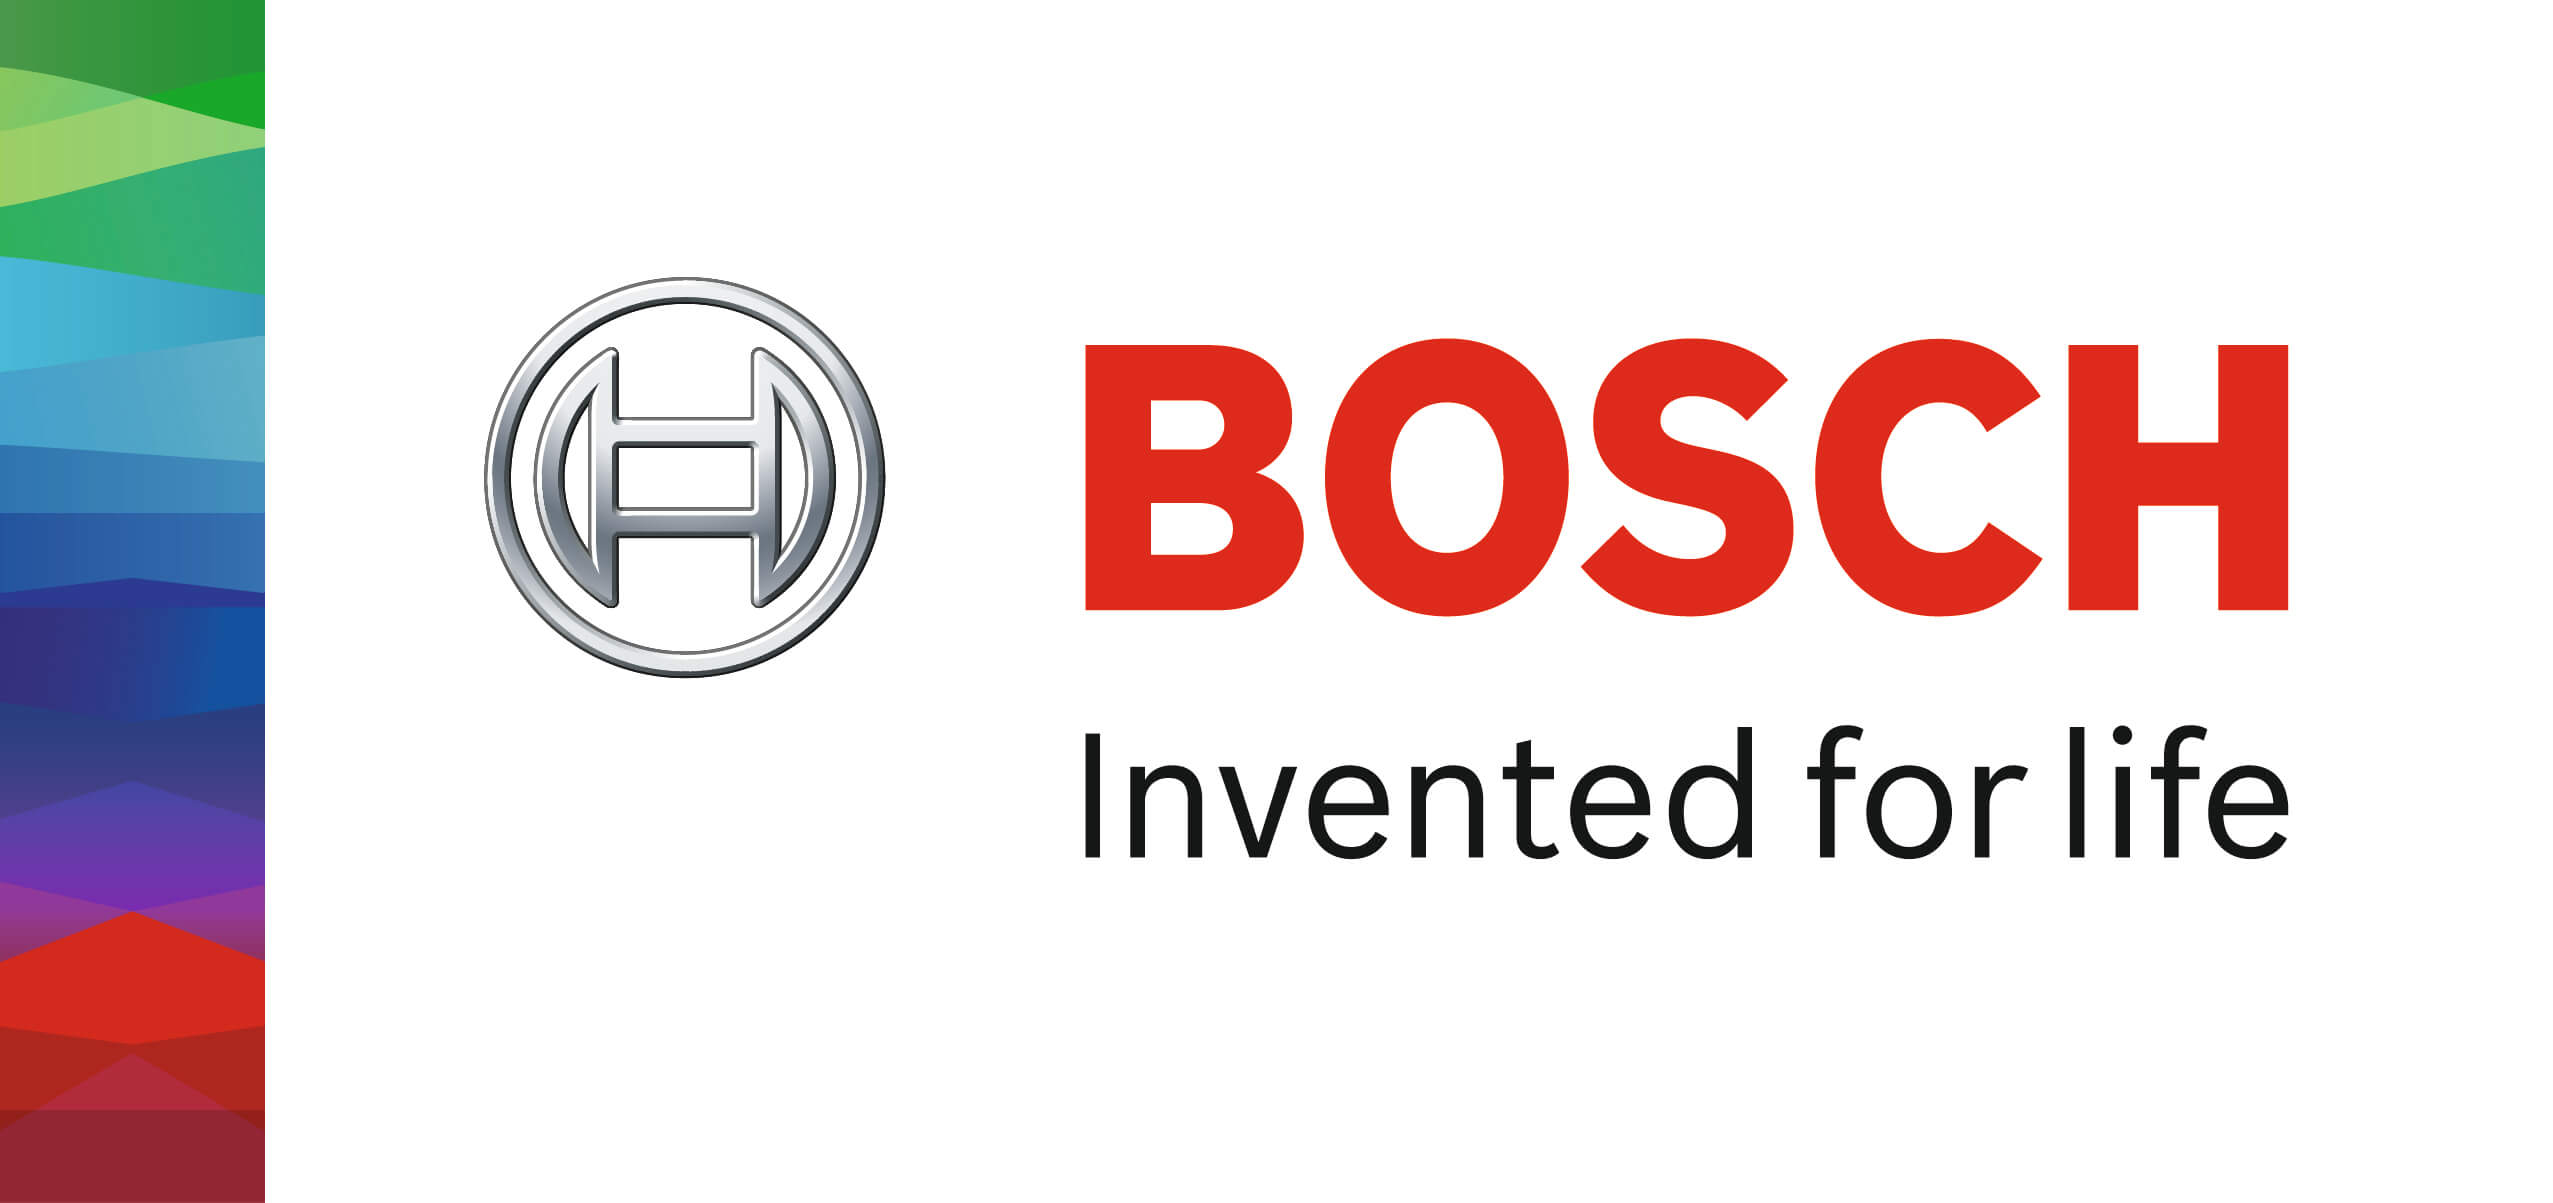 Bosch-LifeClip-DE-4C-Left